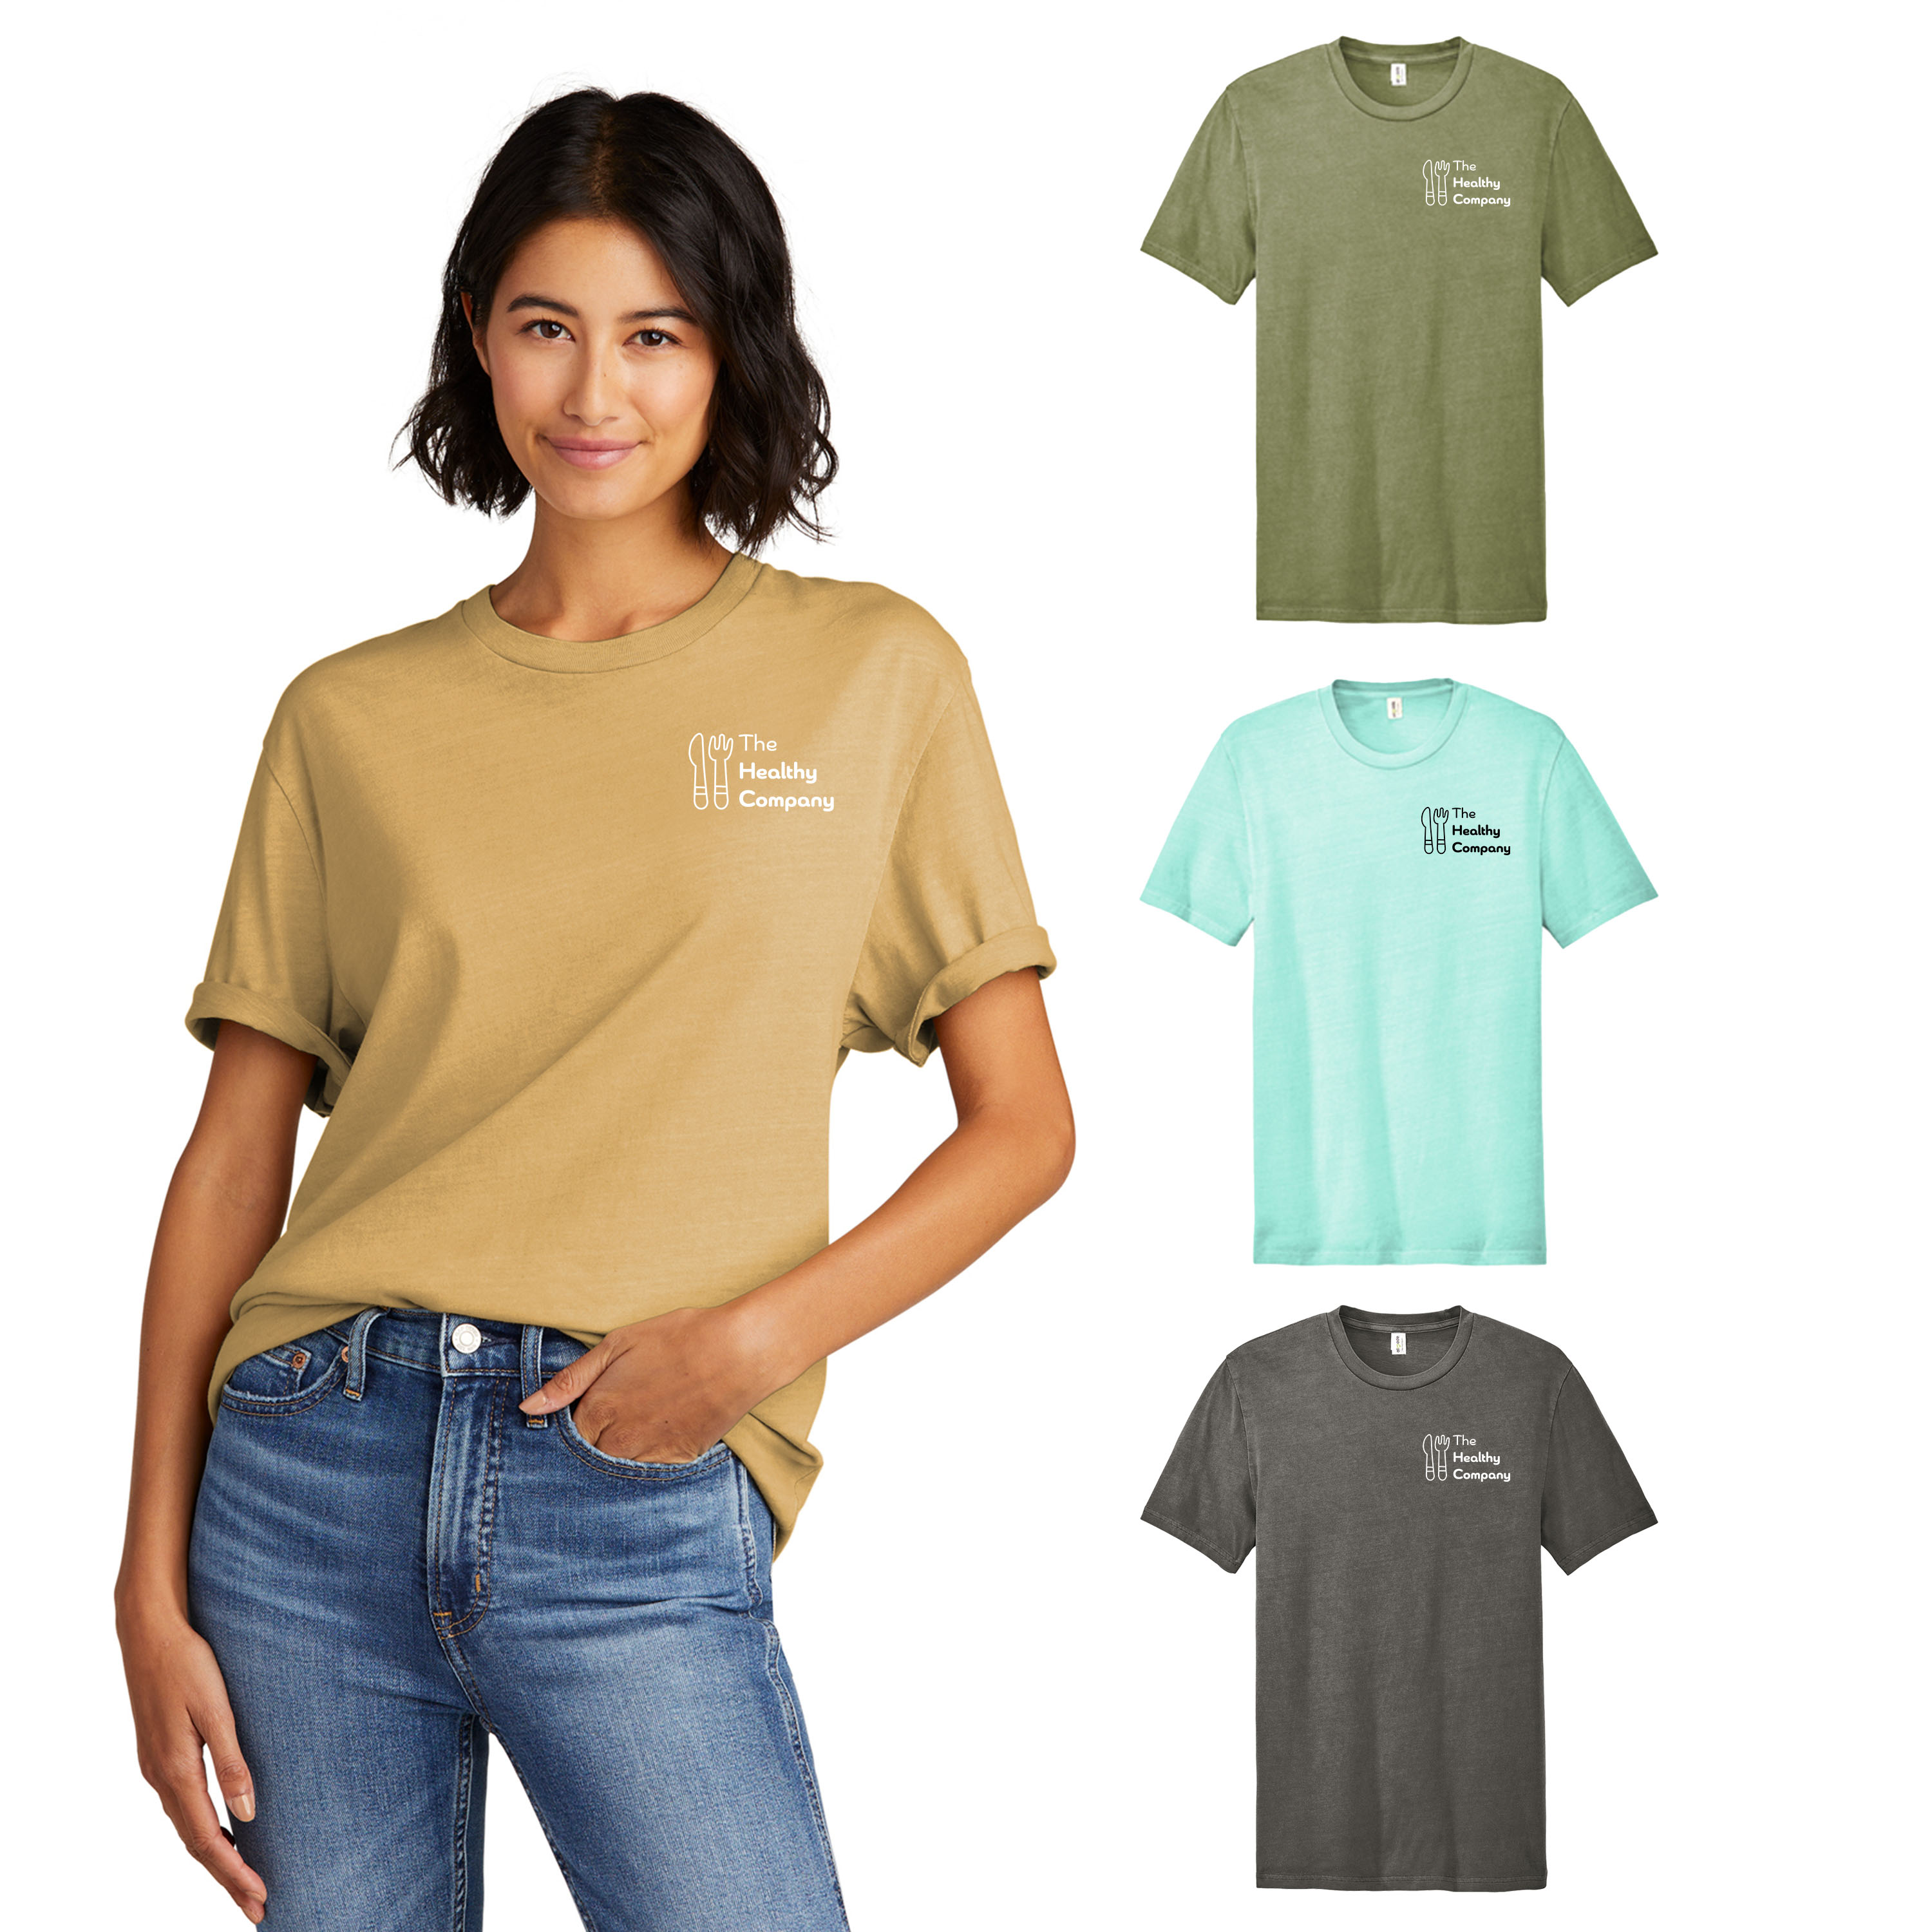 Organic Cotton Mineral Dye Soft Adult T-Shirt | 4.3 oz